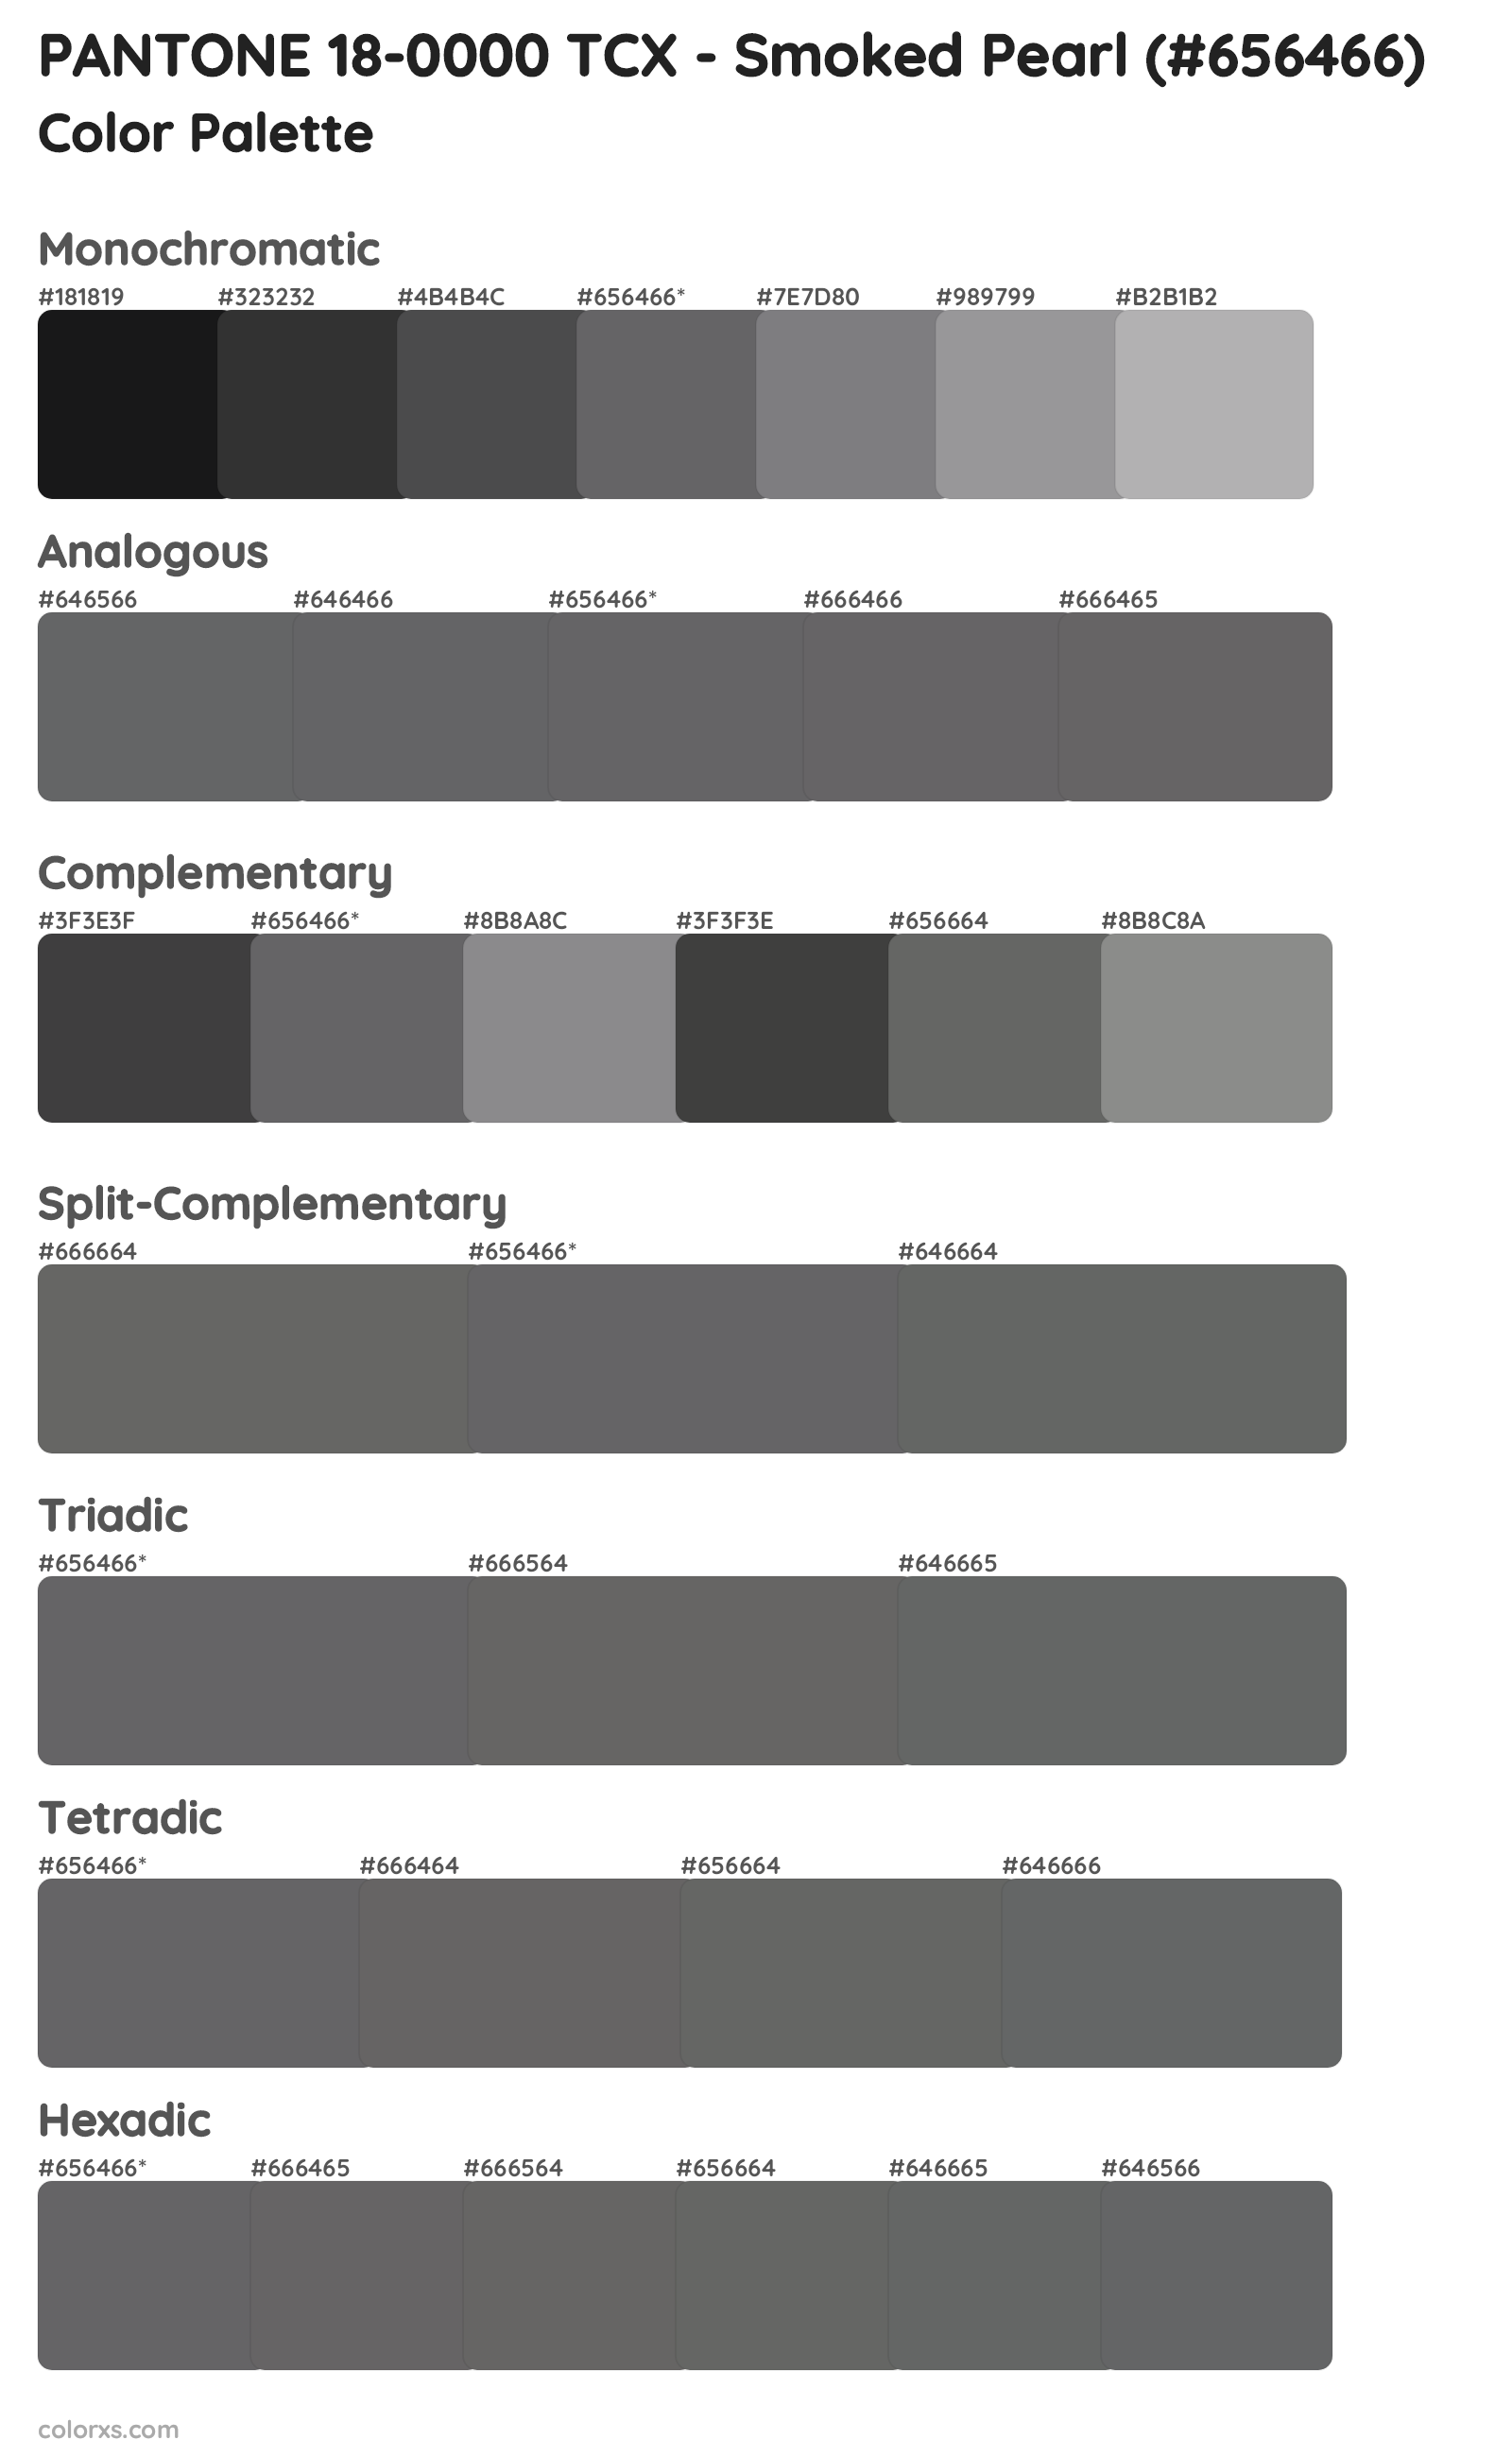 PANTONE 18-0000 TCX - Smoked Pearl Color Scheme Palettes